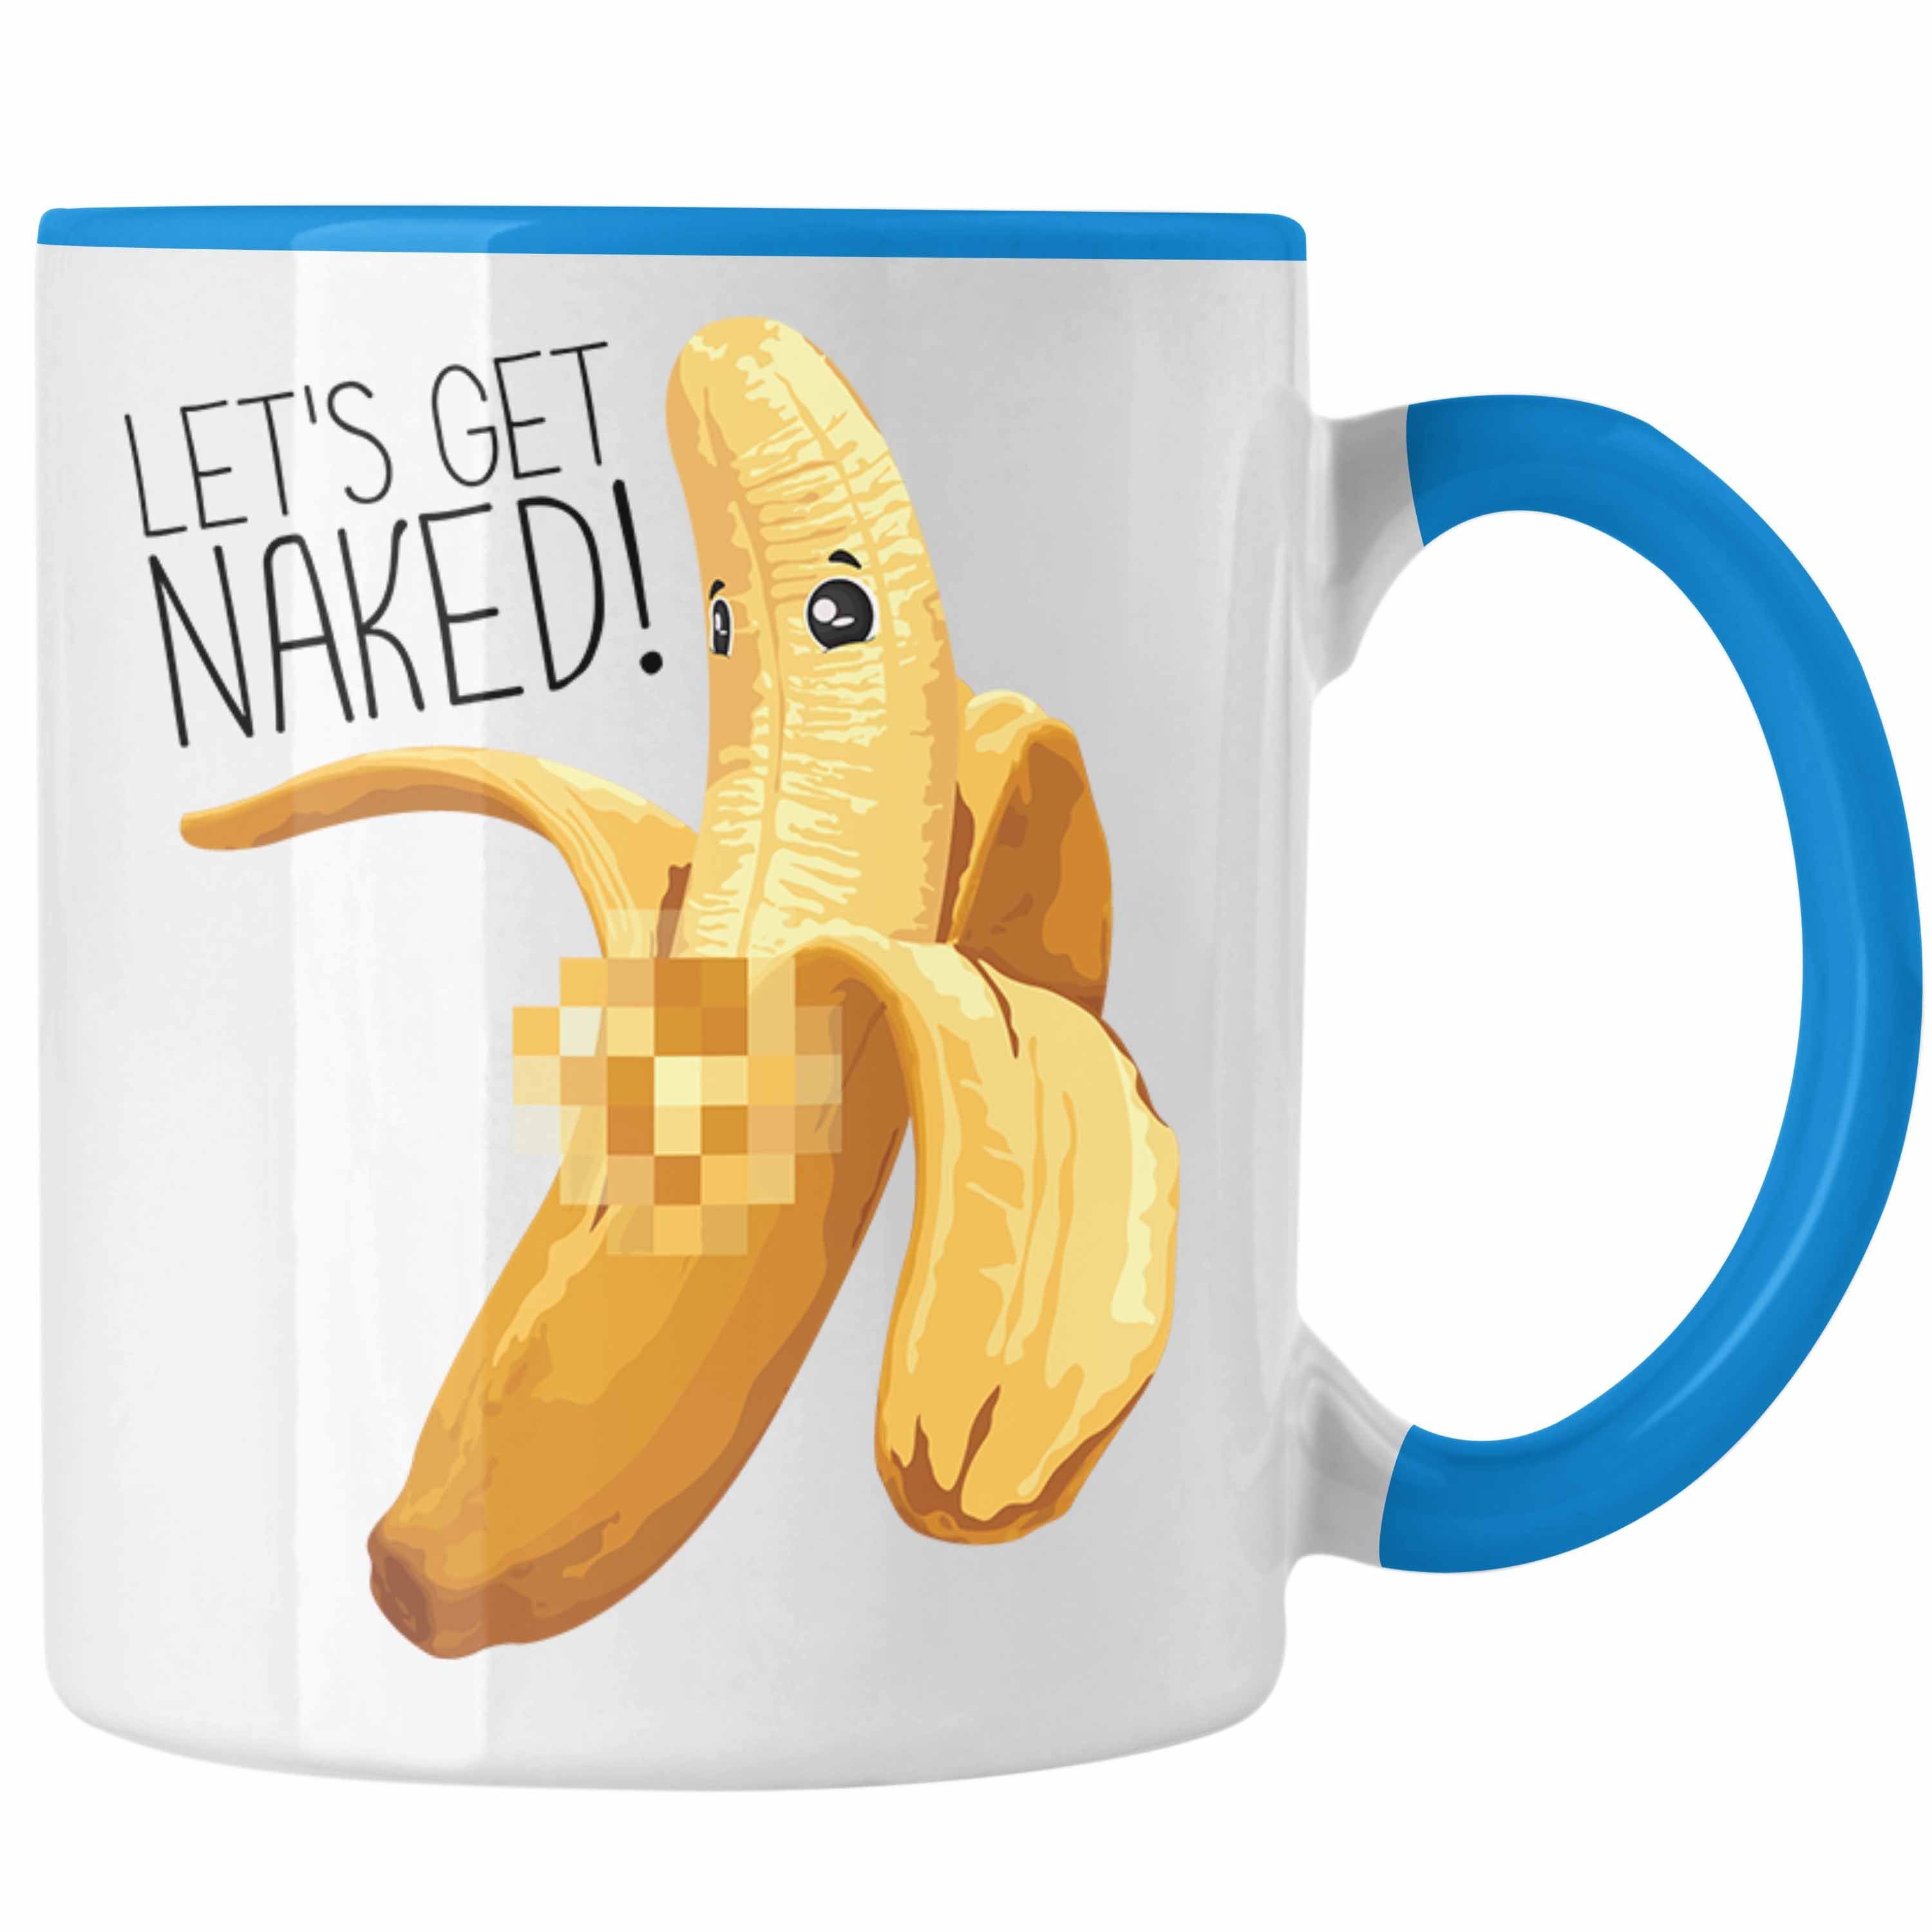 Trendation Tasse Naked Get Striptease Blau Lets Tasse Humor Geschenk Erwachsener Bech Banane